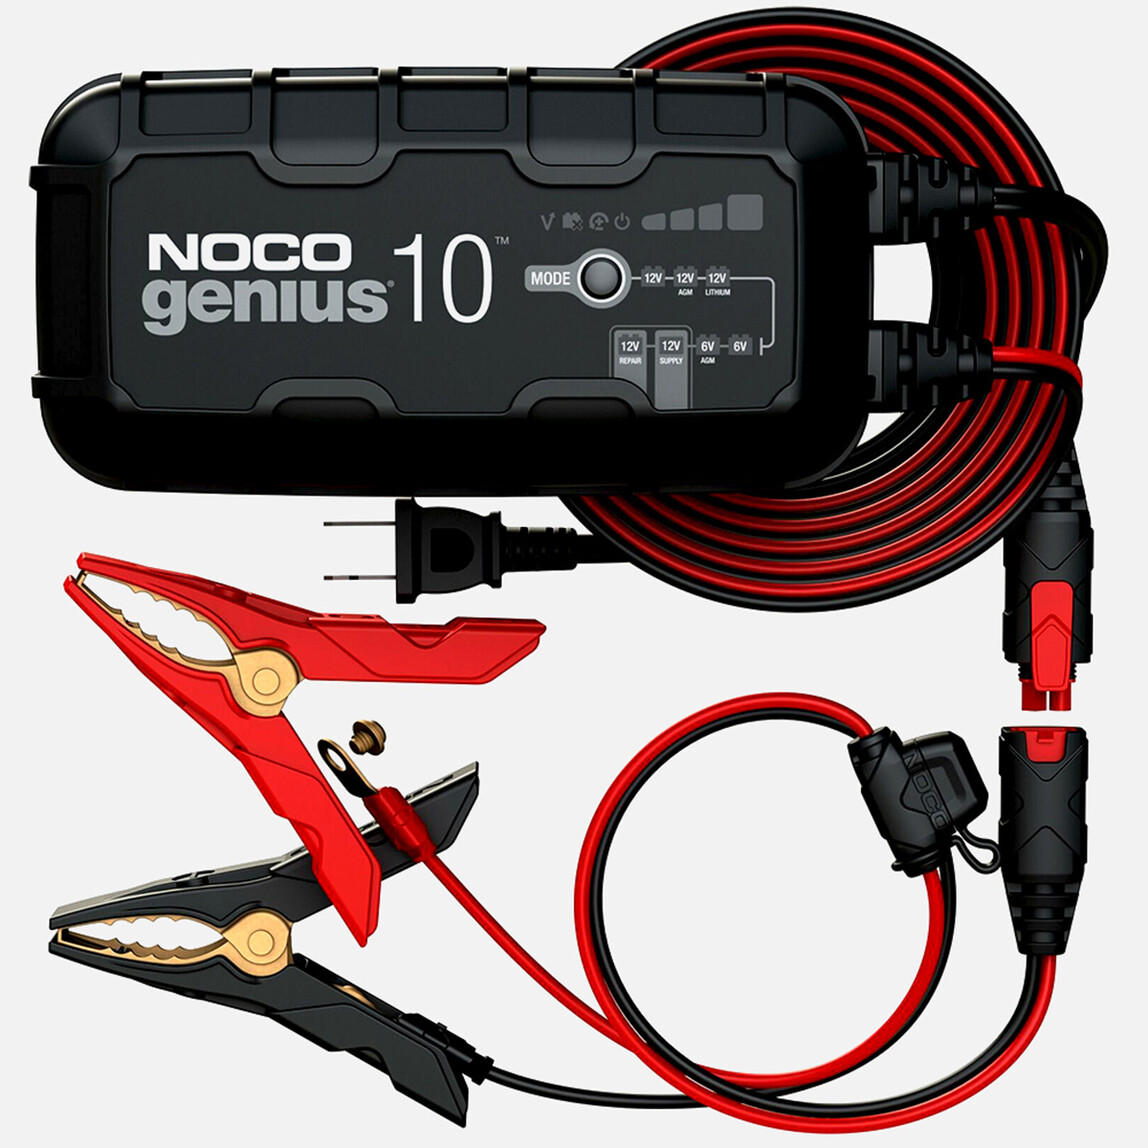    Noco Genius 10 6V/12V 230A Akıllı Akü Şarj ve Akü Bakım Desülfatör Power Supply  